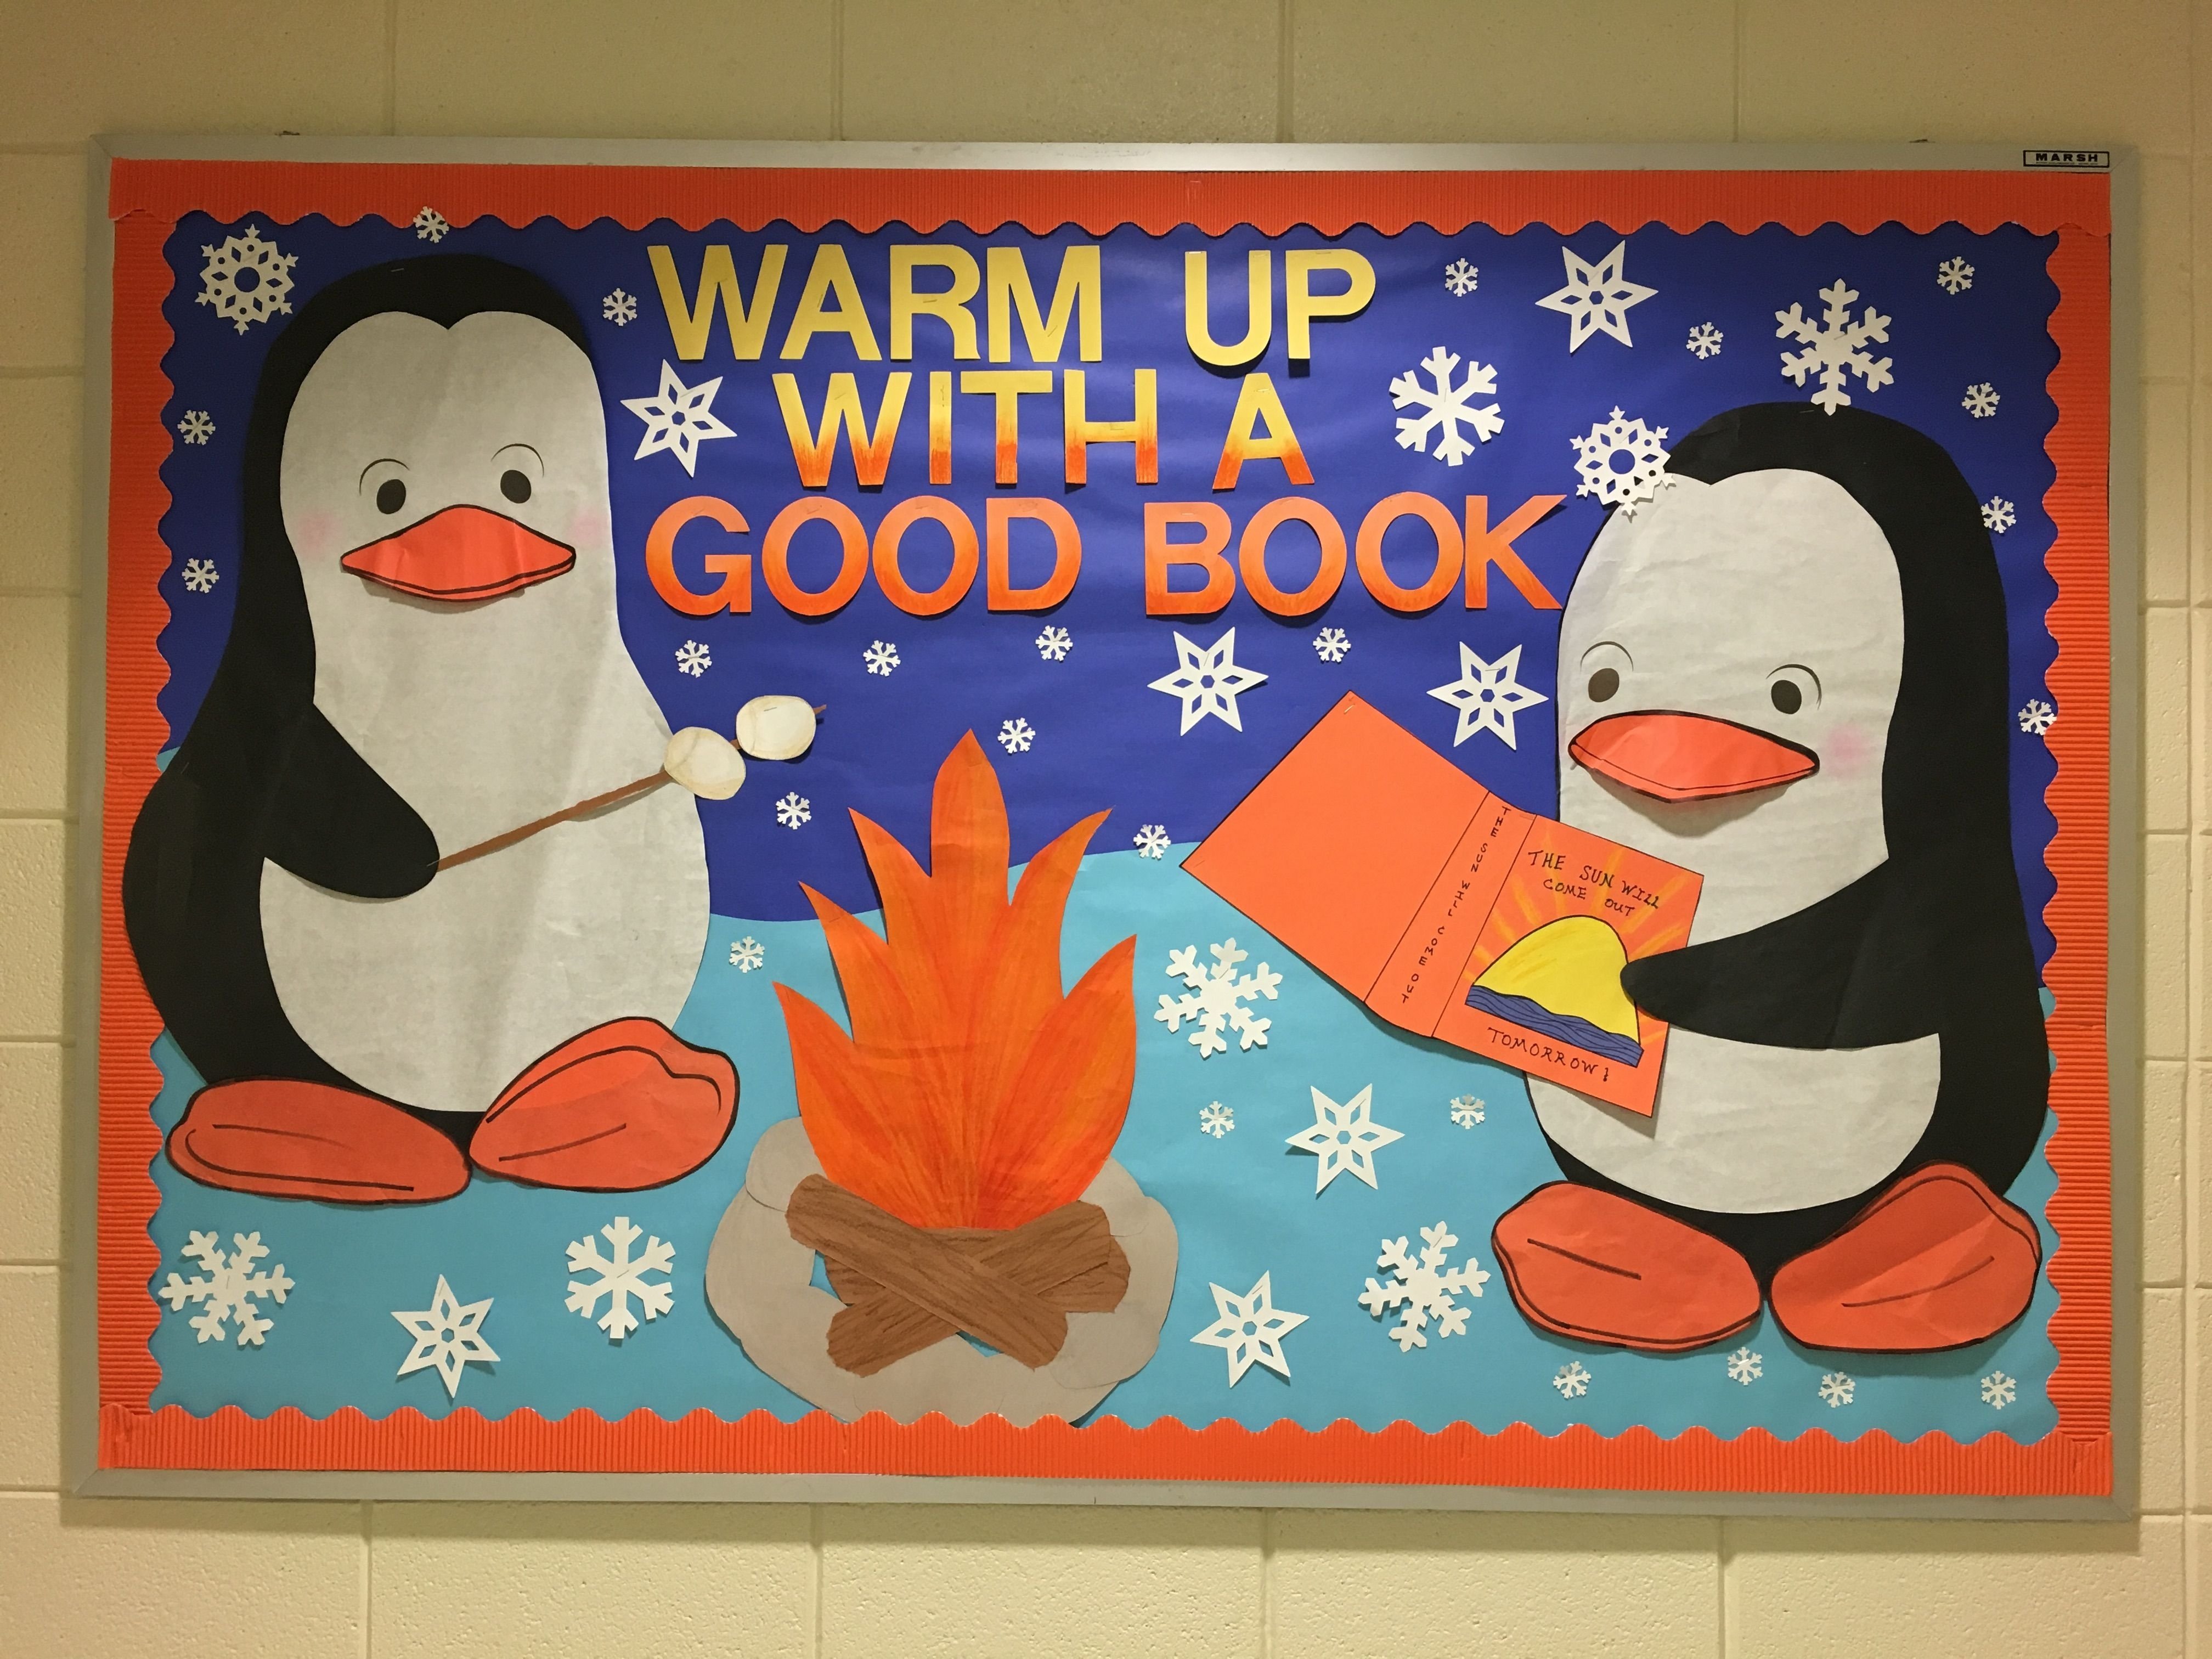 10 Attractive Winter Library Bulletin Board Ideas winter school library bulletin board warm up with a good book 1 2022